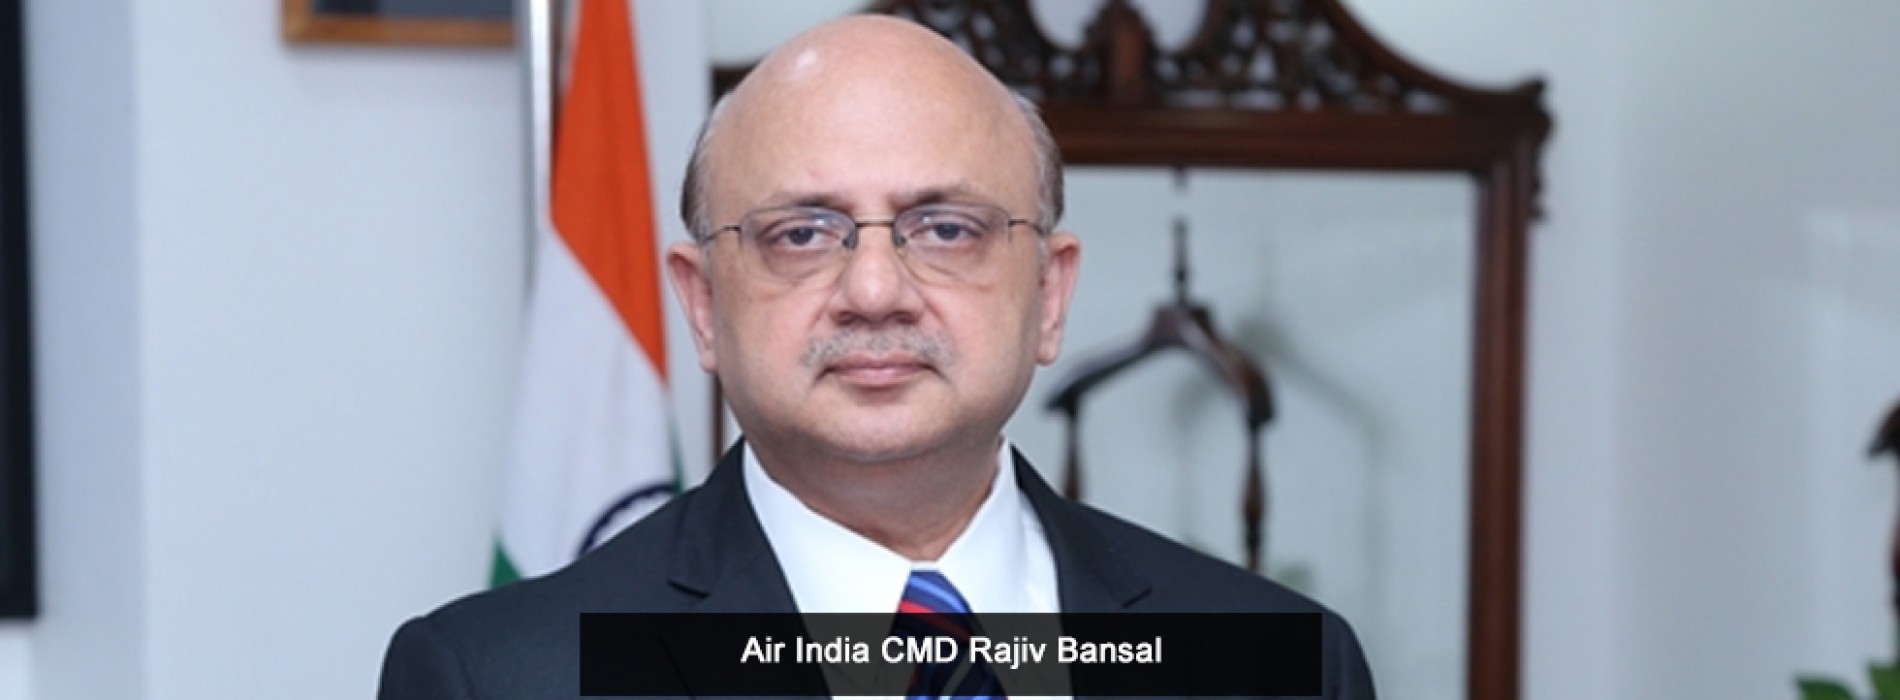 Air India CMD Rajiv Bansal gets 3 months extension